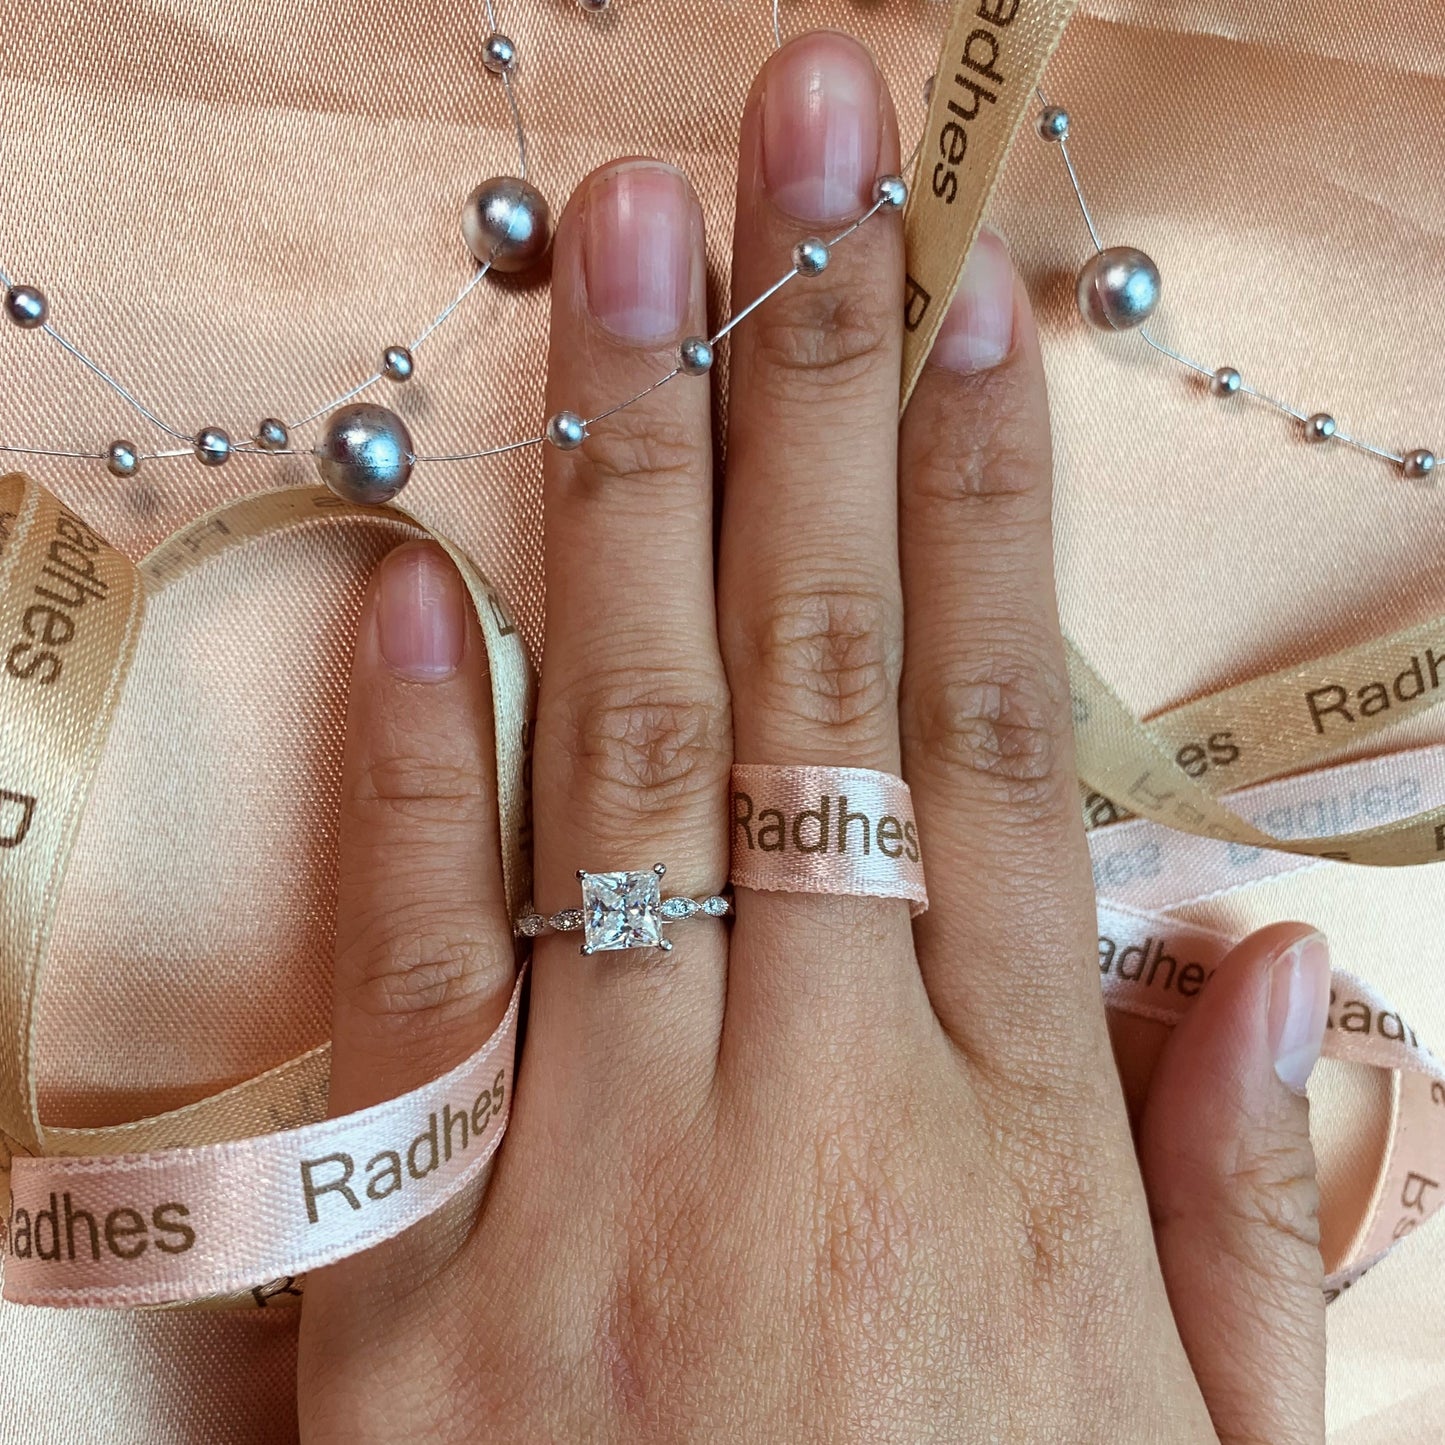 Artdeco Vintage 1.1 carat square princess cut Moissanite Engagement Ring in White Gold